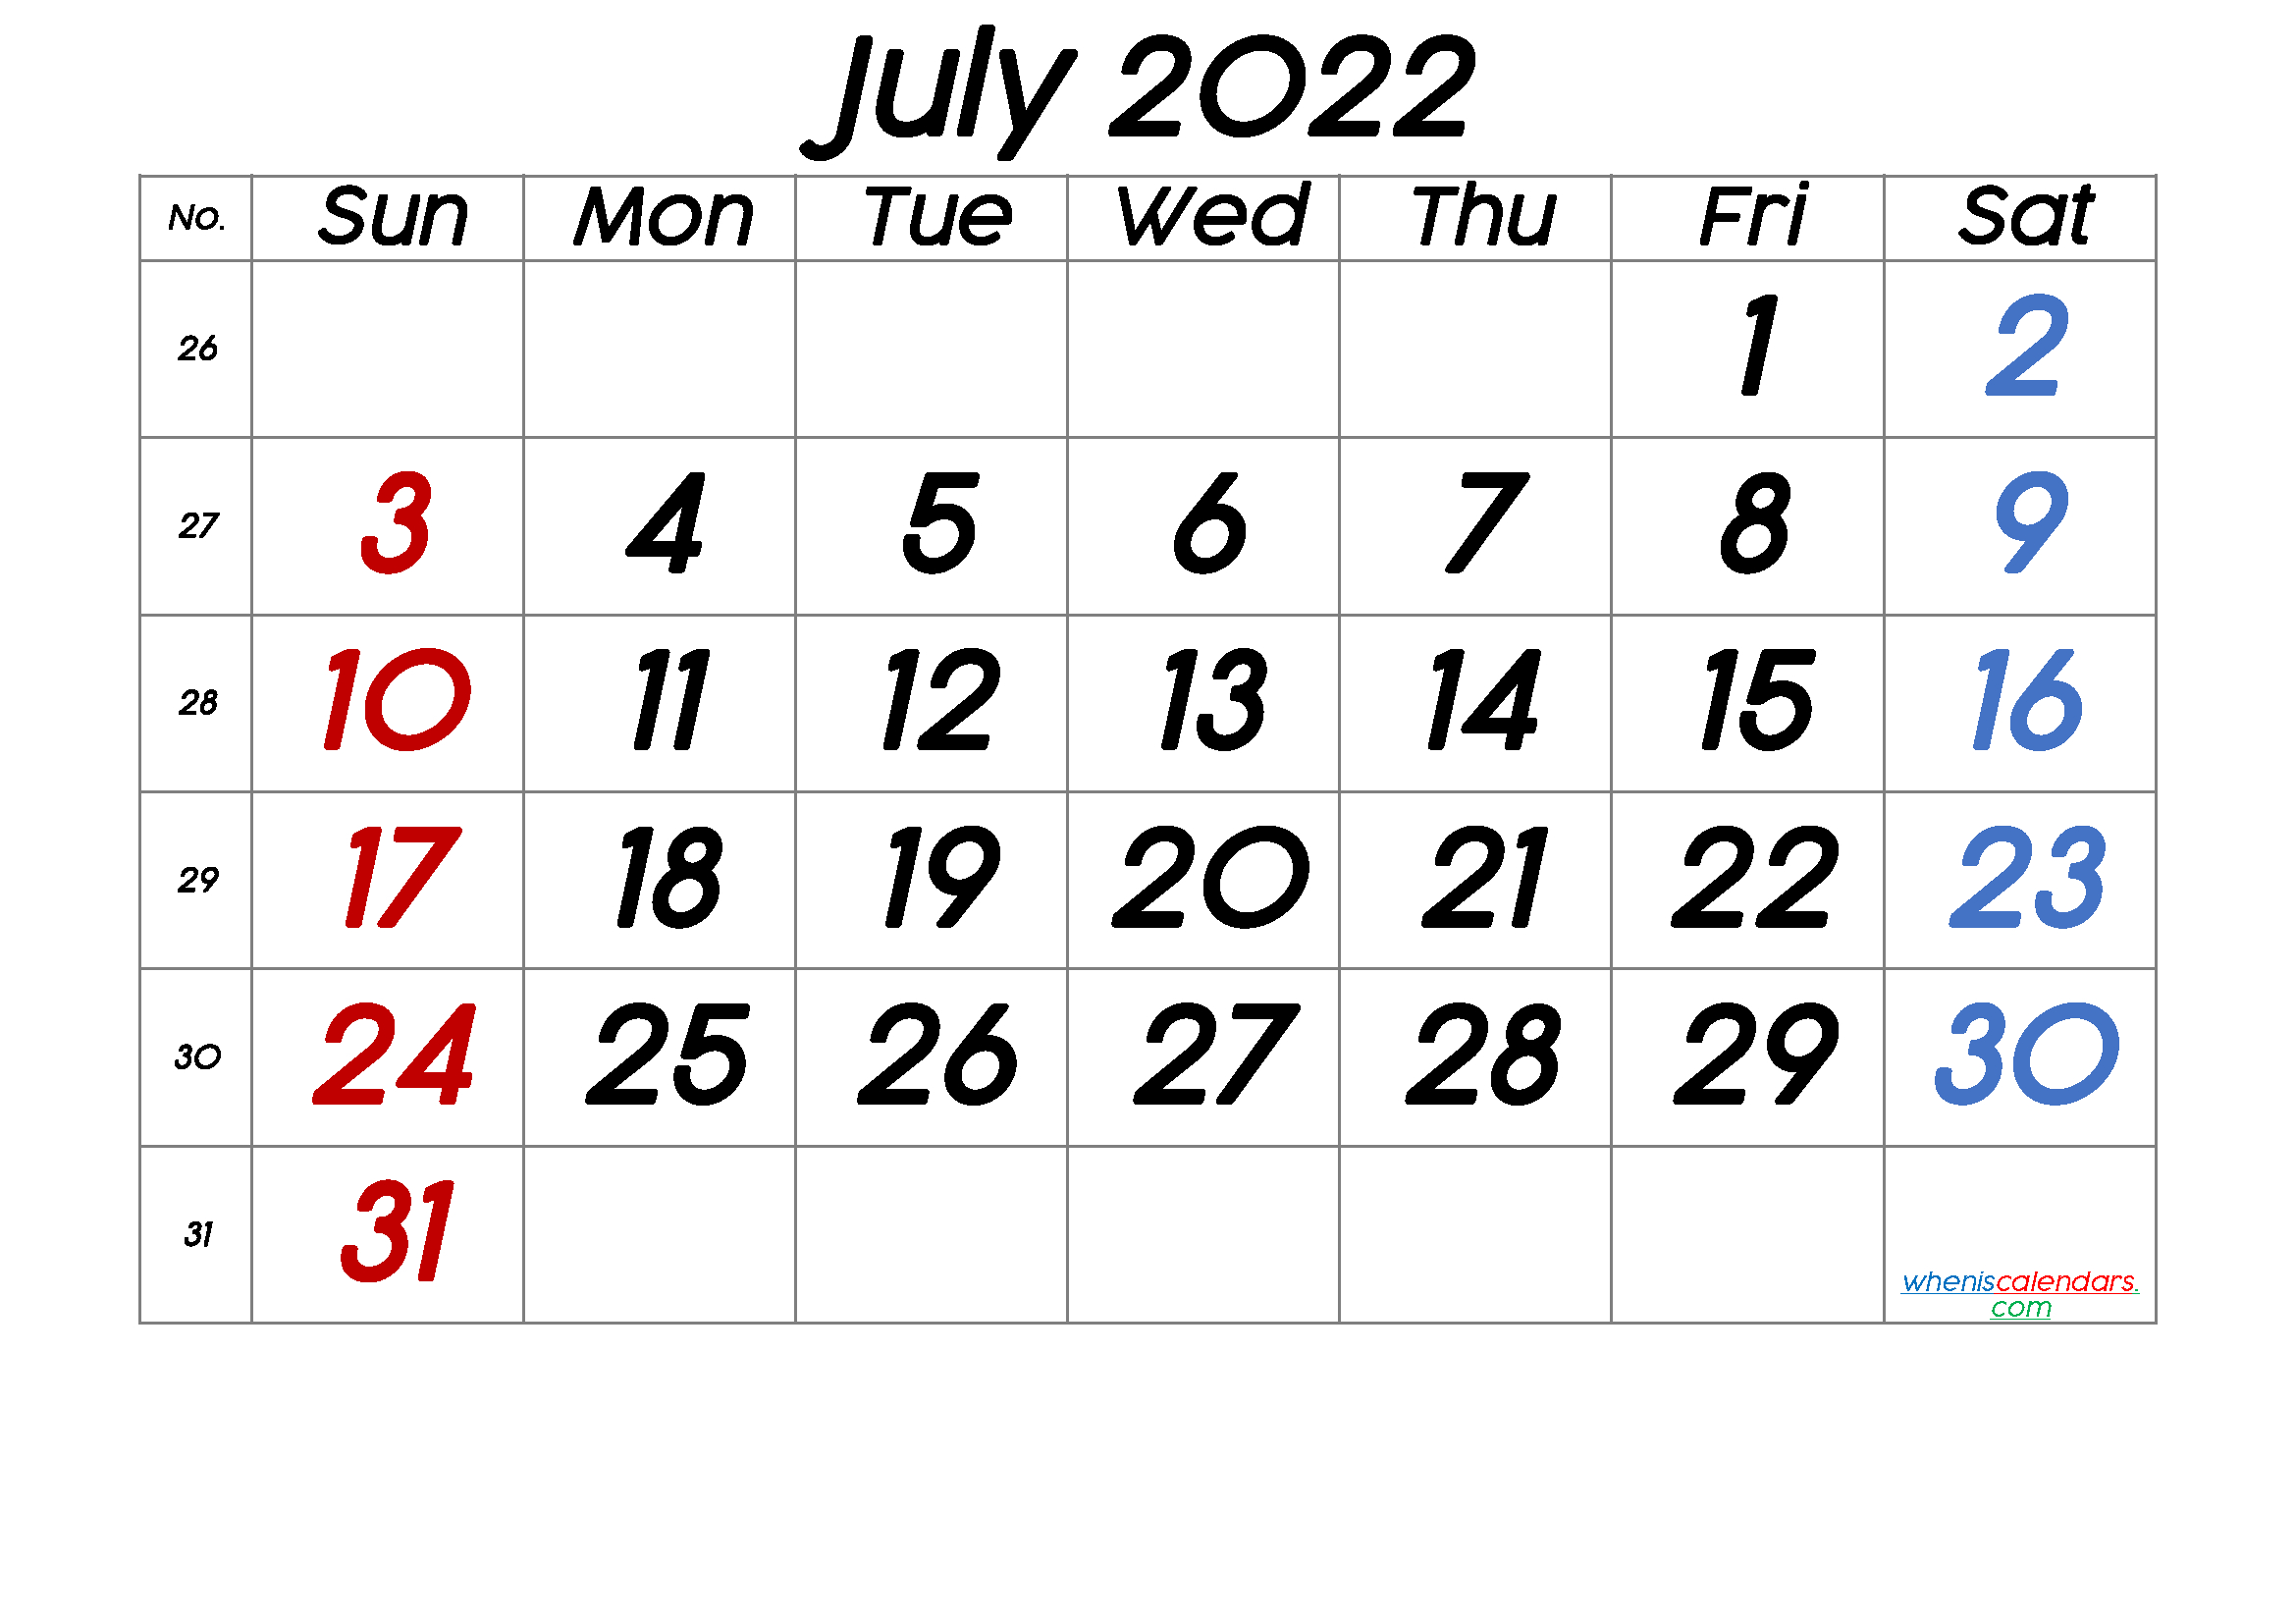 Catch 2022 Calendar For July